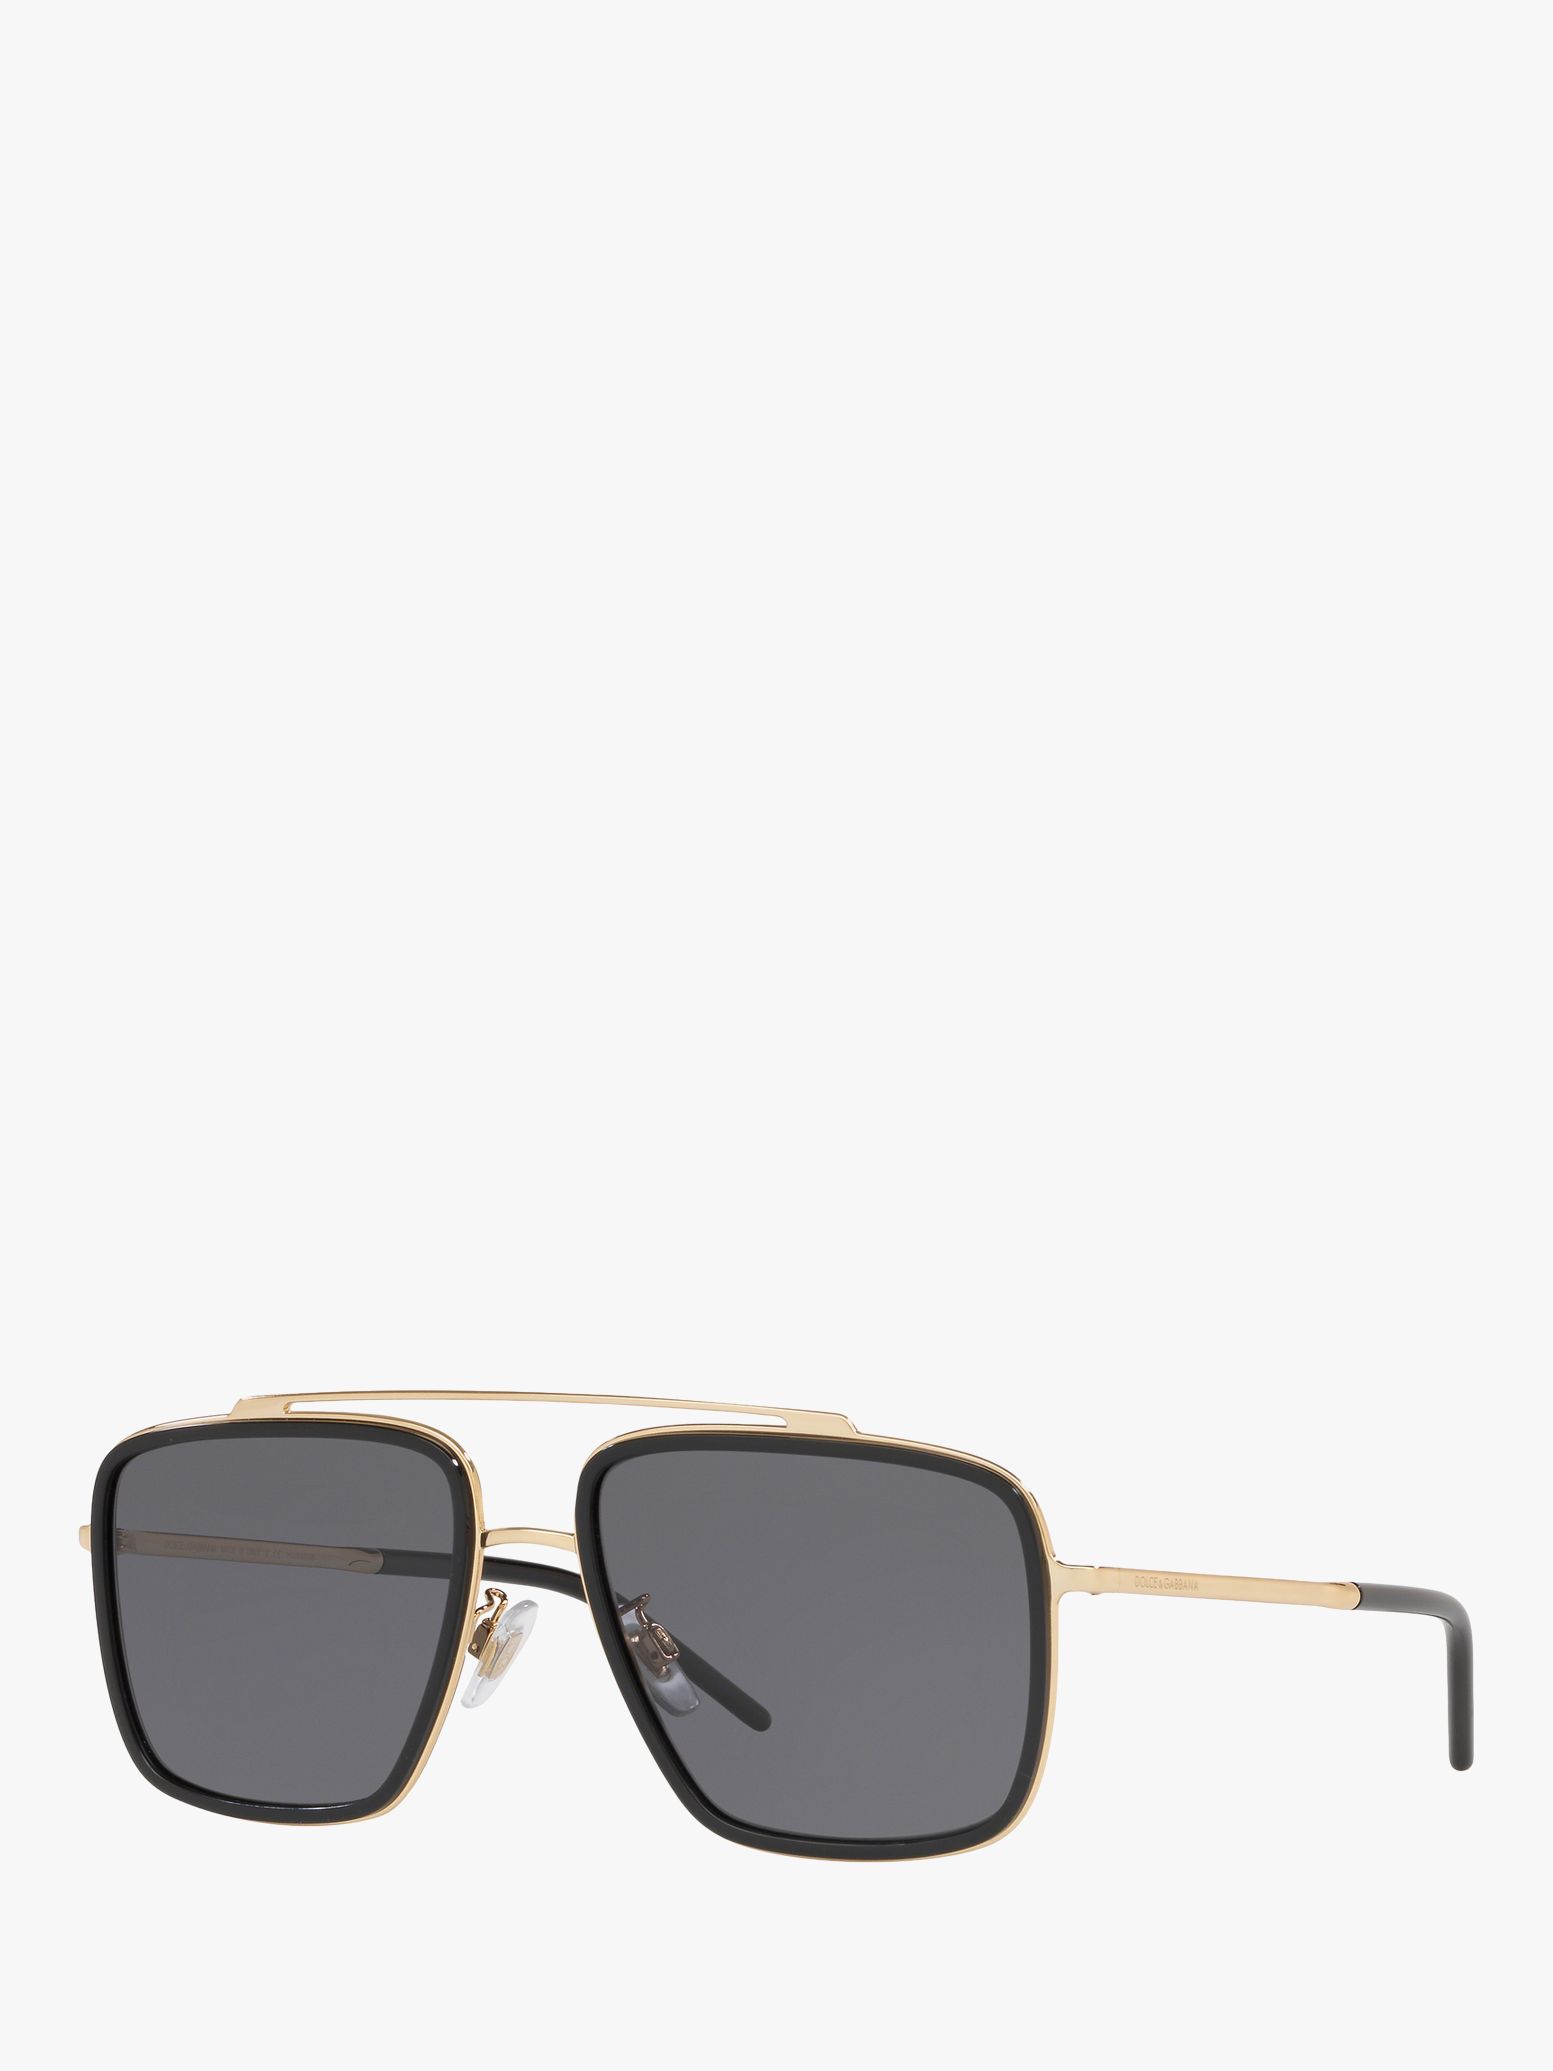 Dolce & Gabbana DG2220 Men's Polarised Square Sunglasses, Gold/Black at  John Lewis & Partners